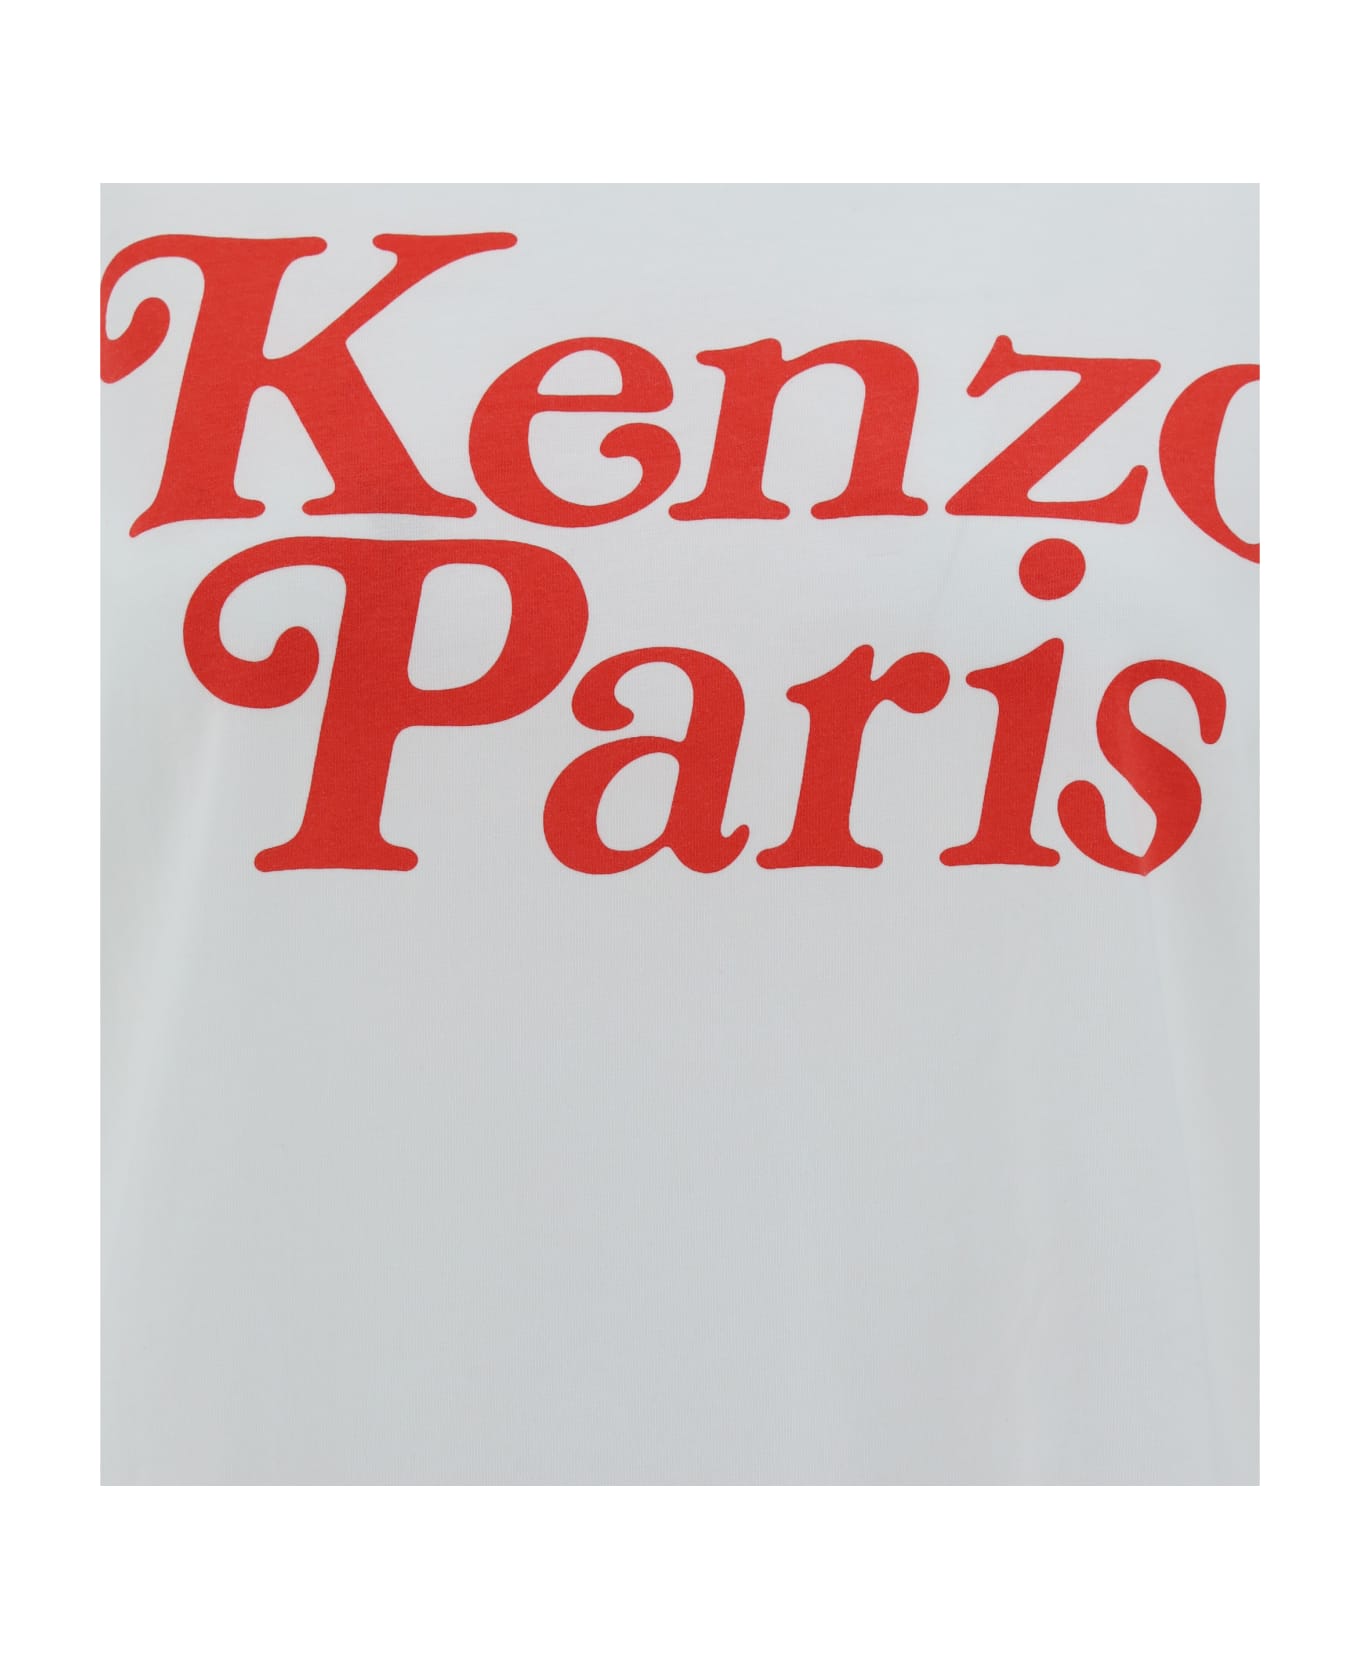 Kenzo Logo Print T-shirt - White